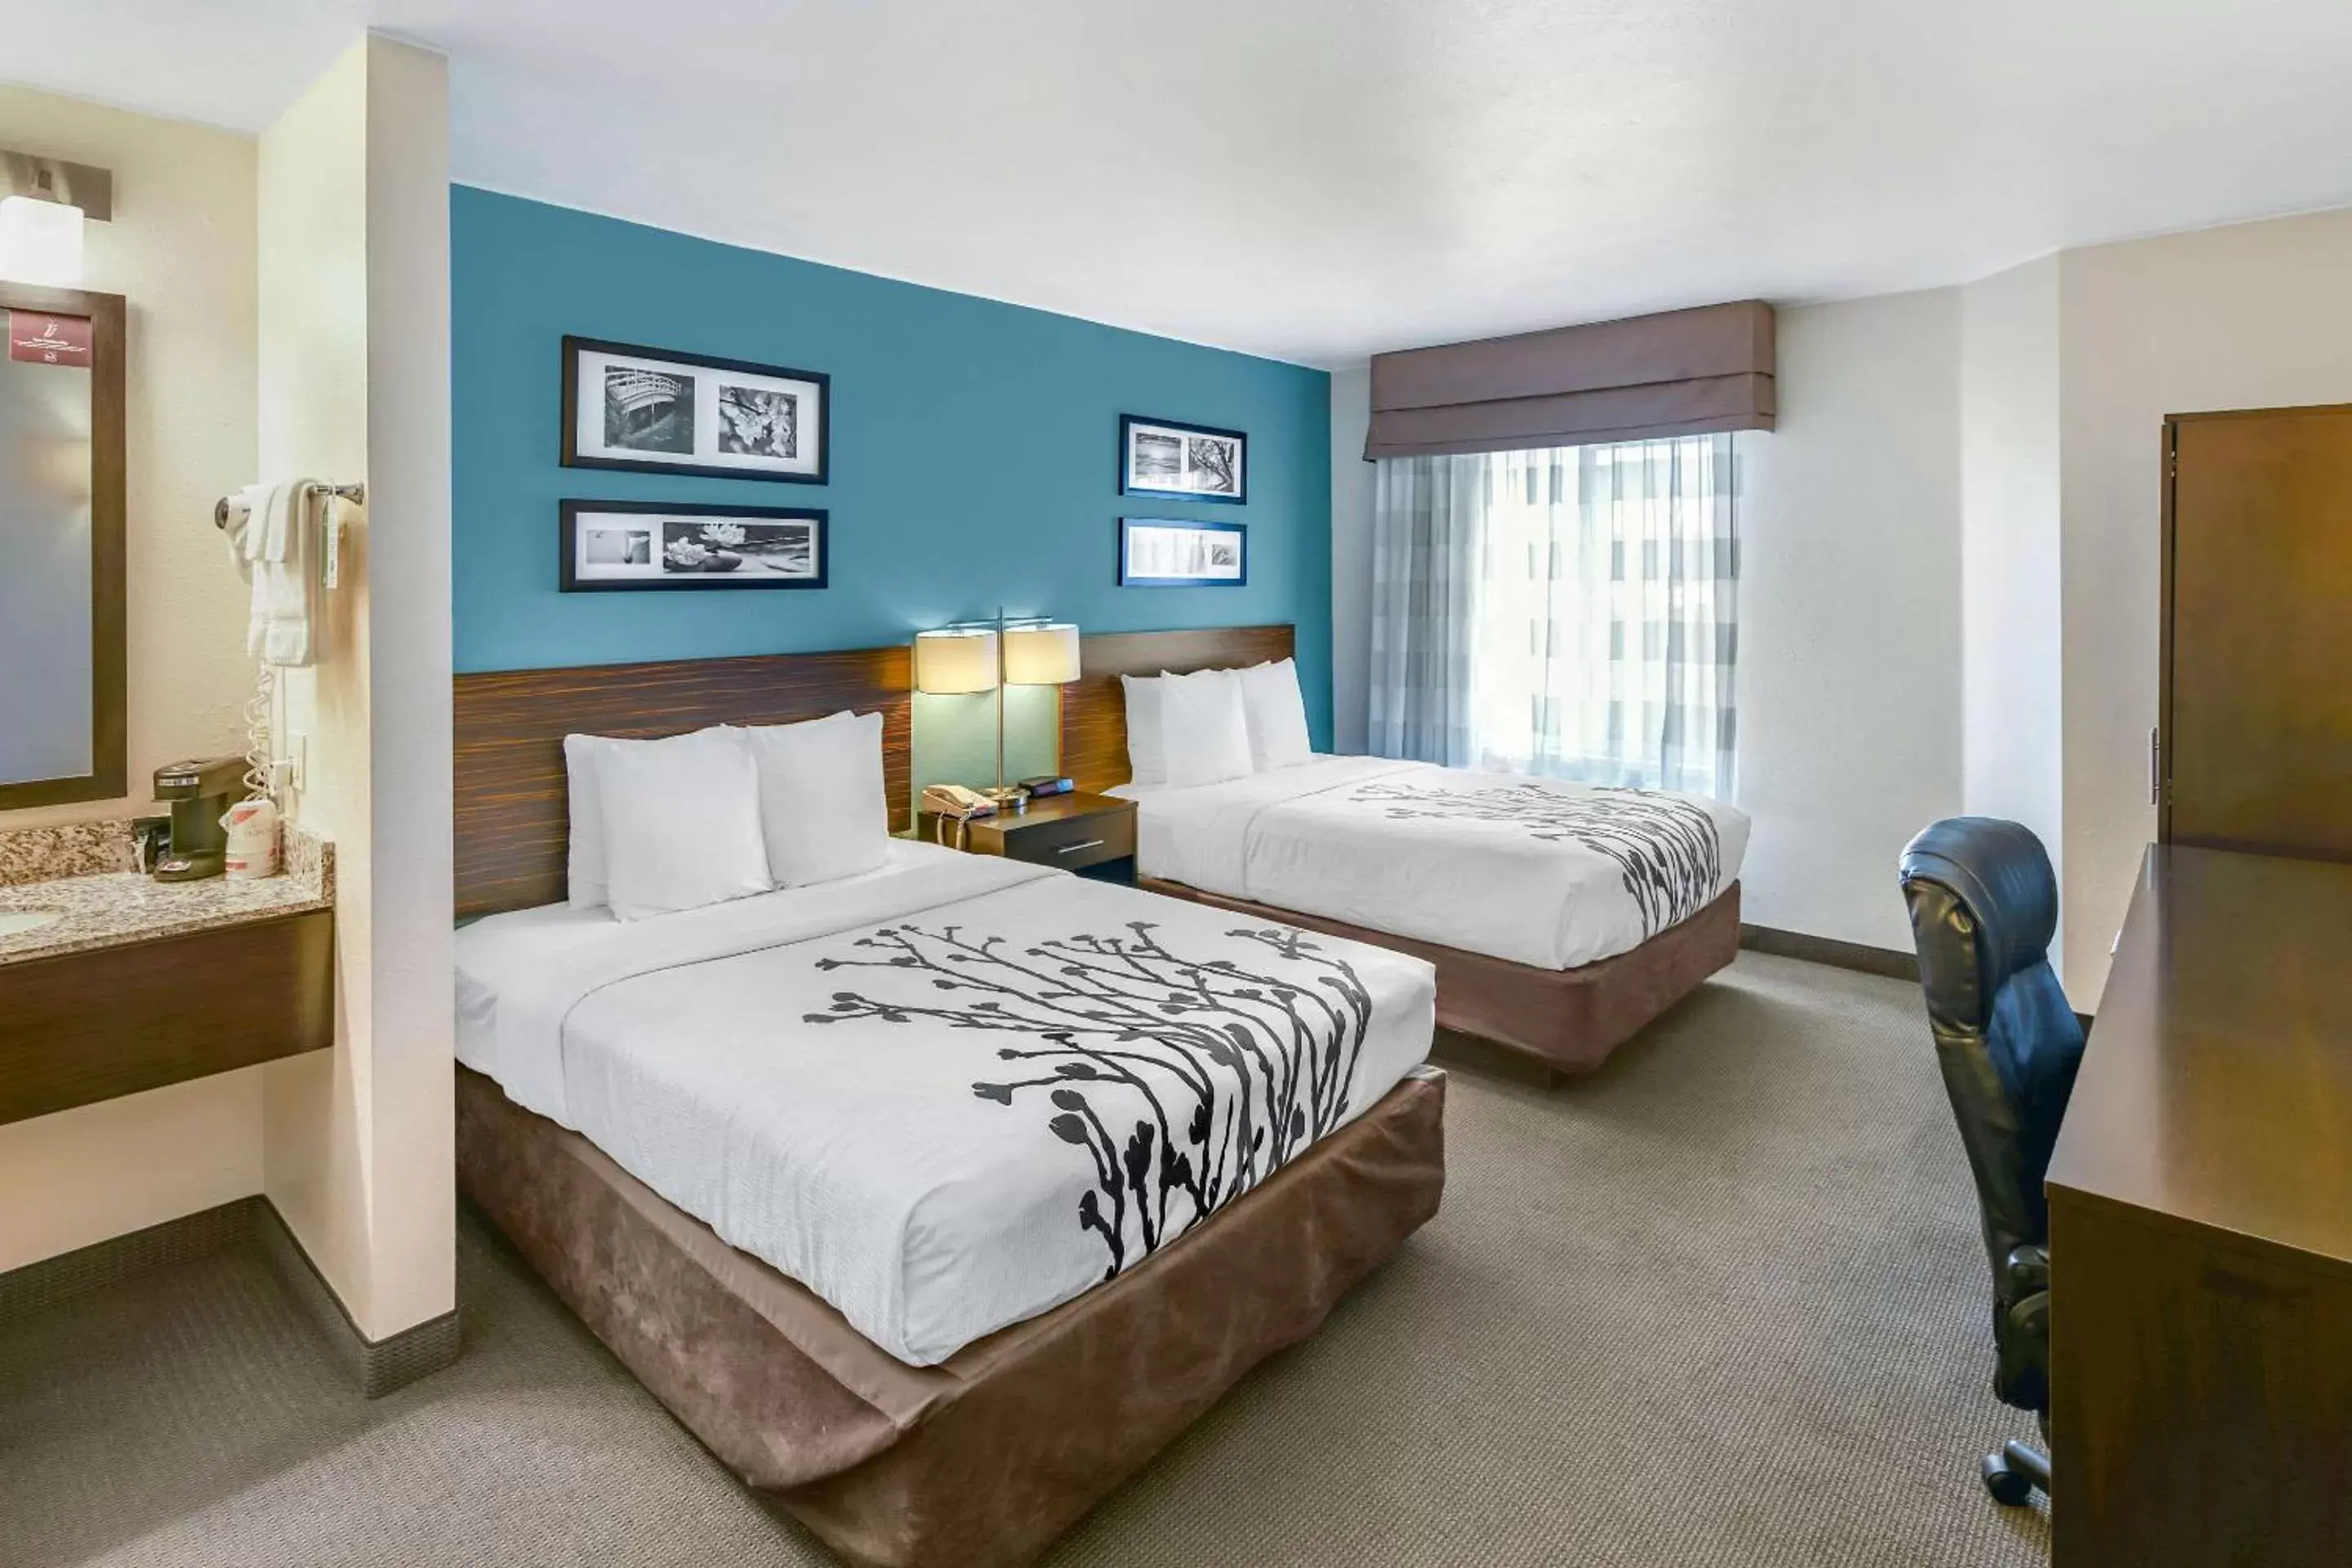 Photo of the whole room, Bed in Sleep Inn near Washington State Line